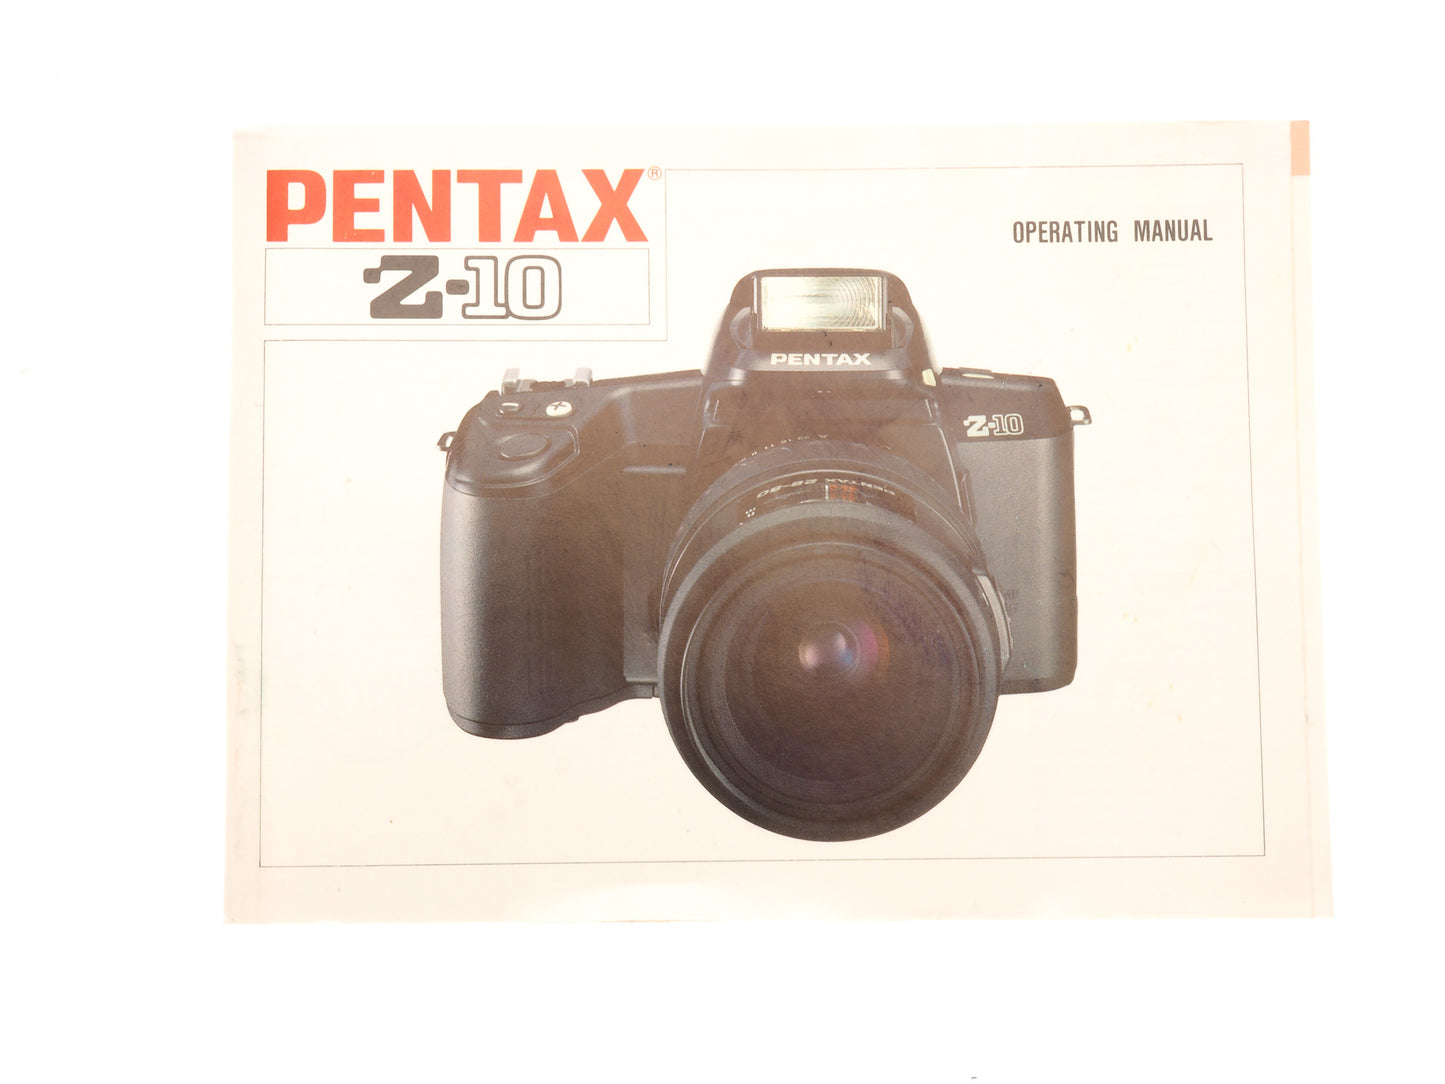 Pentax Z-10 Instruction Manual